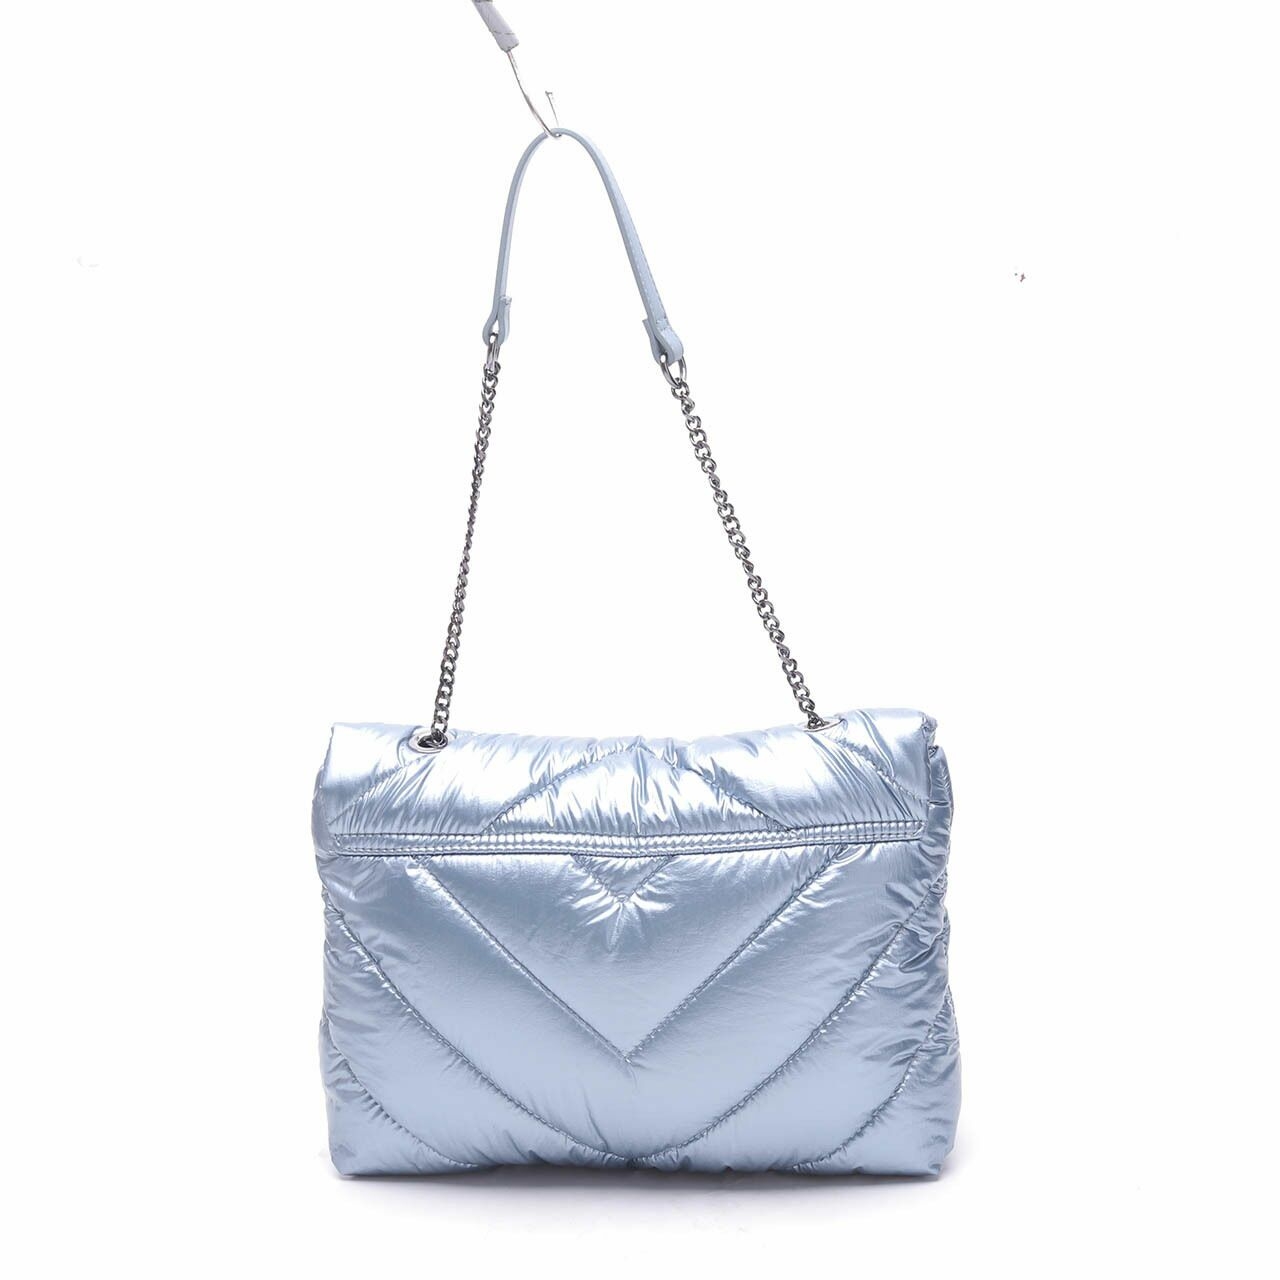 Zara Blue Metallic Shoulder Bag